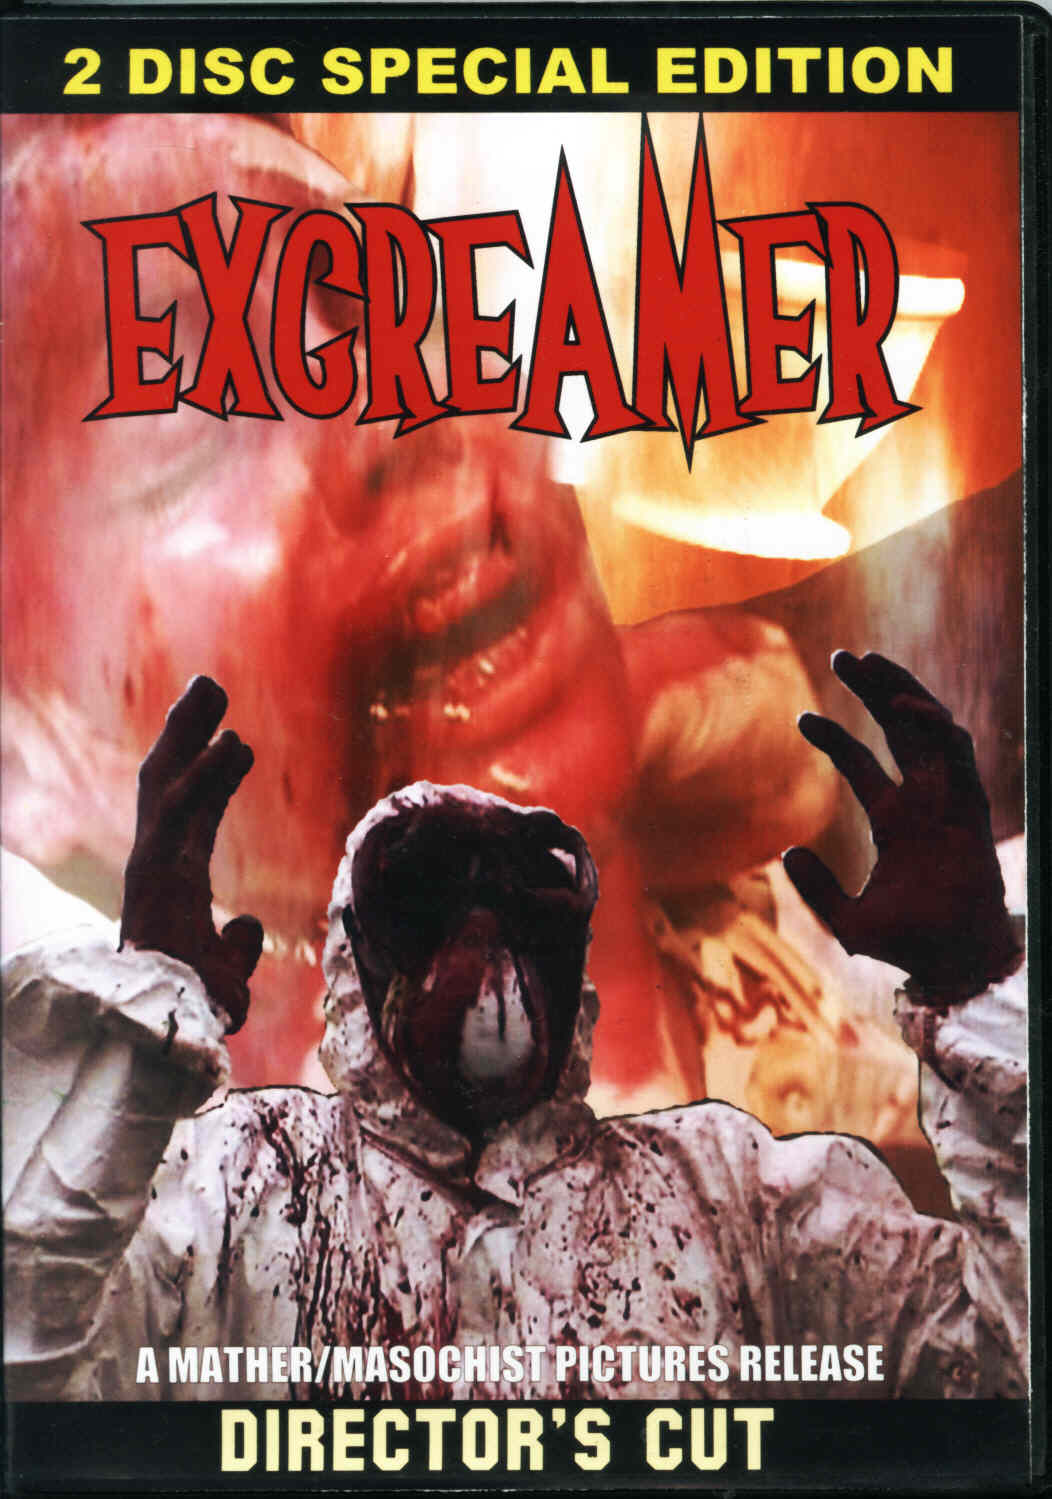 Excreamer, Master Movies